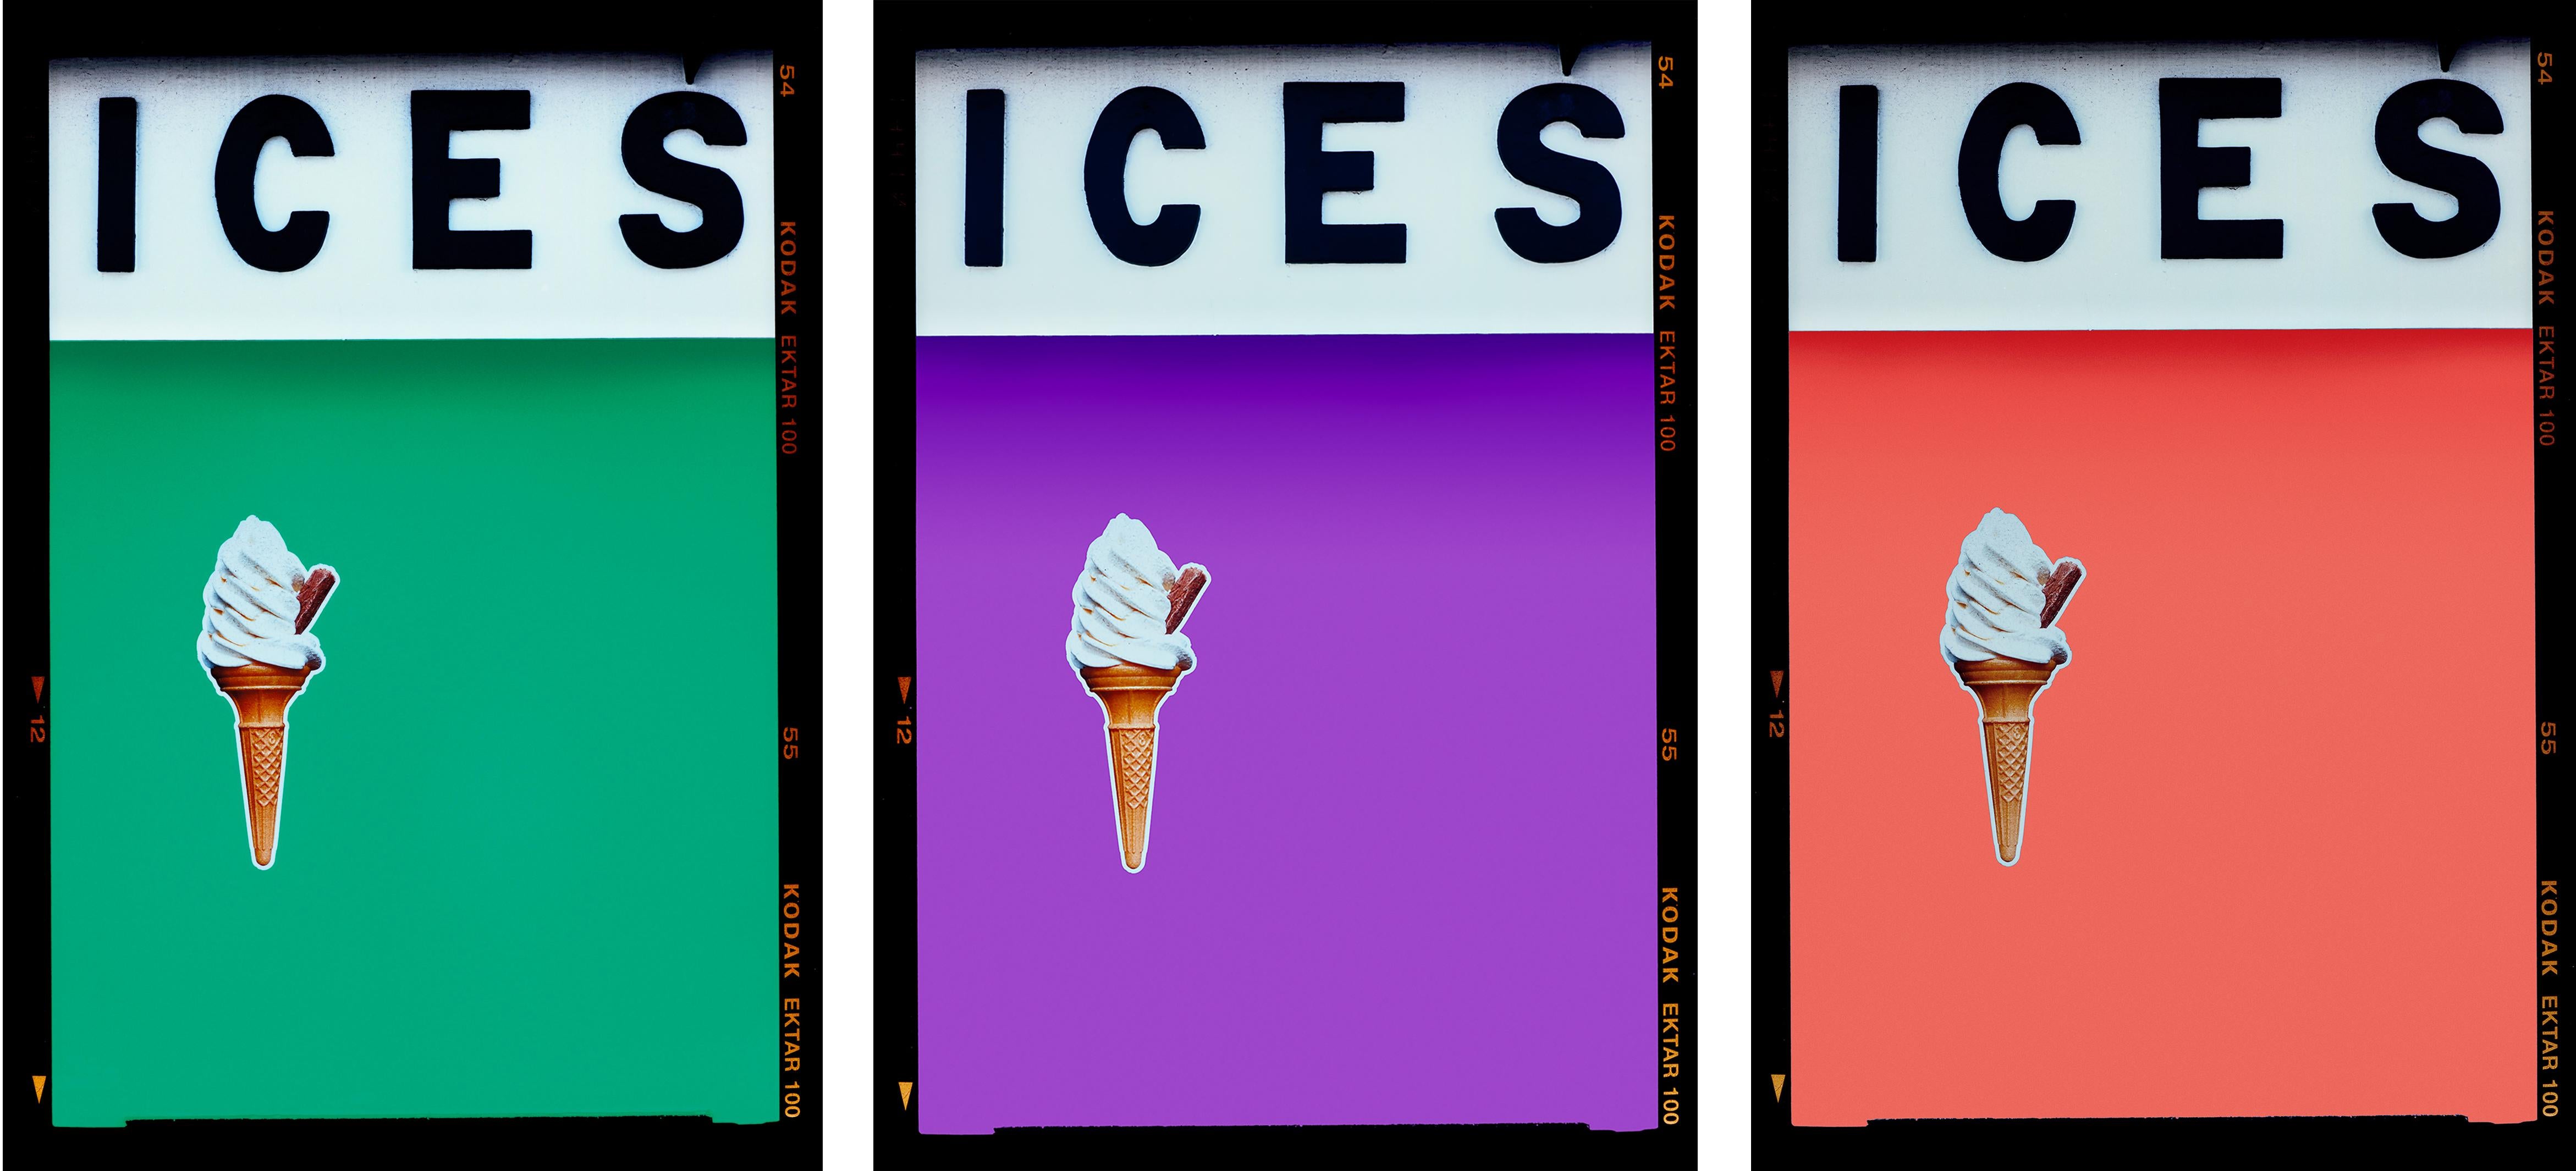 Richard Heeps Print - ICES Viridian, Lilac, Melondrama - Three Framed Pop Art Color Photographs